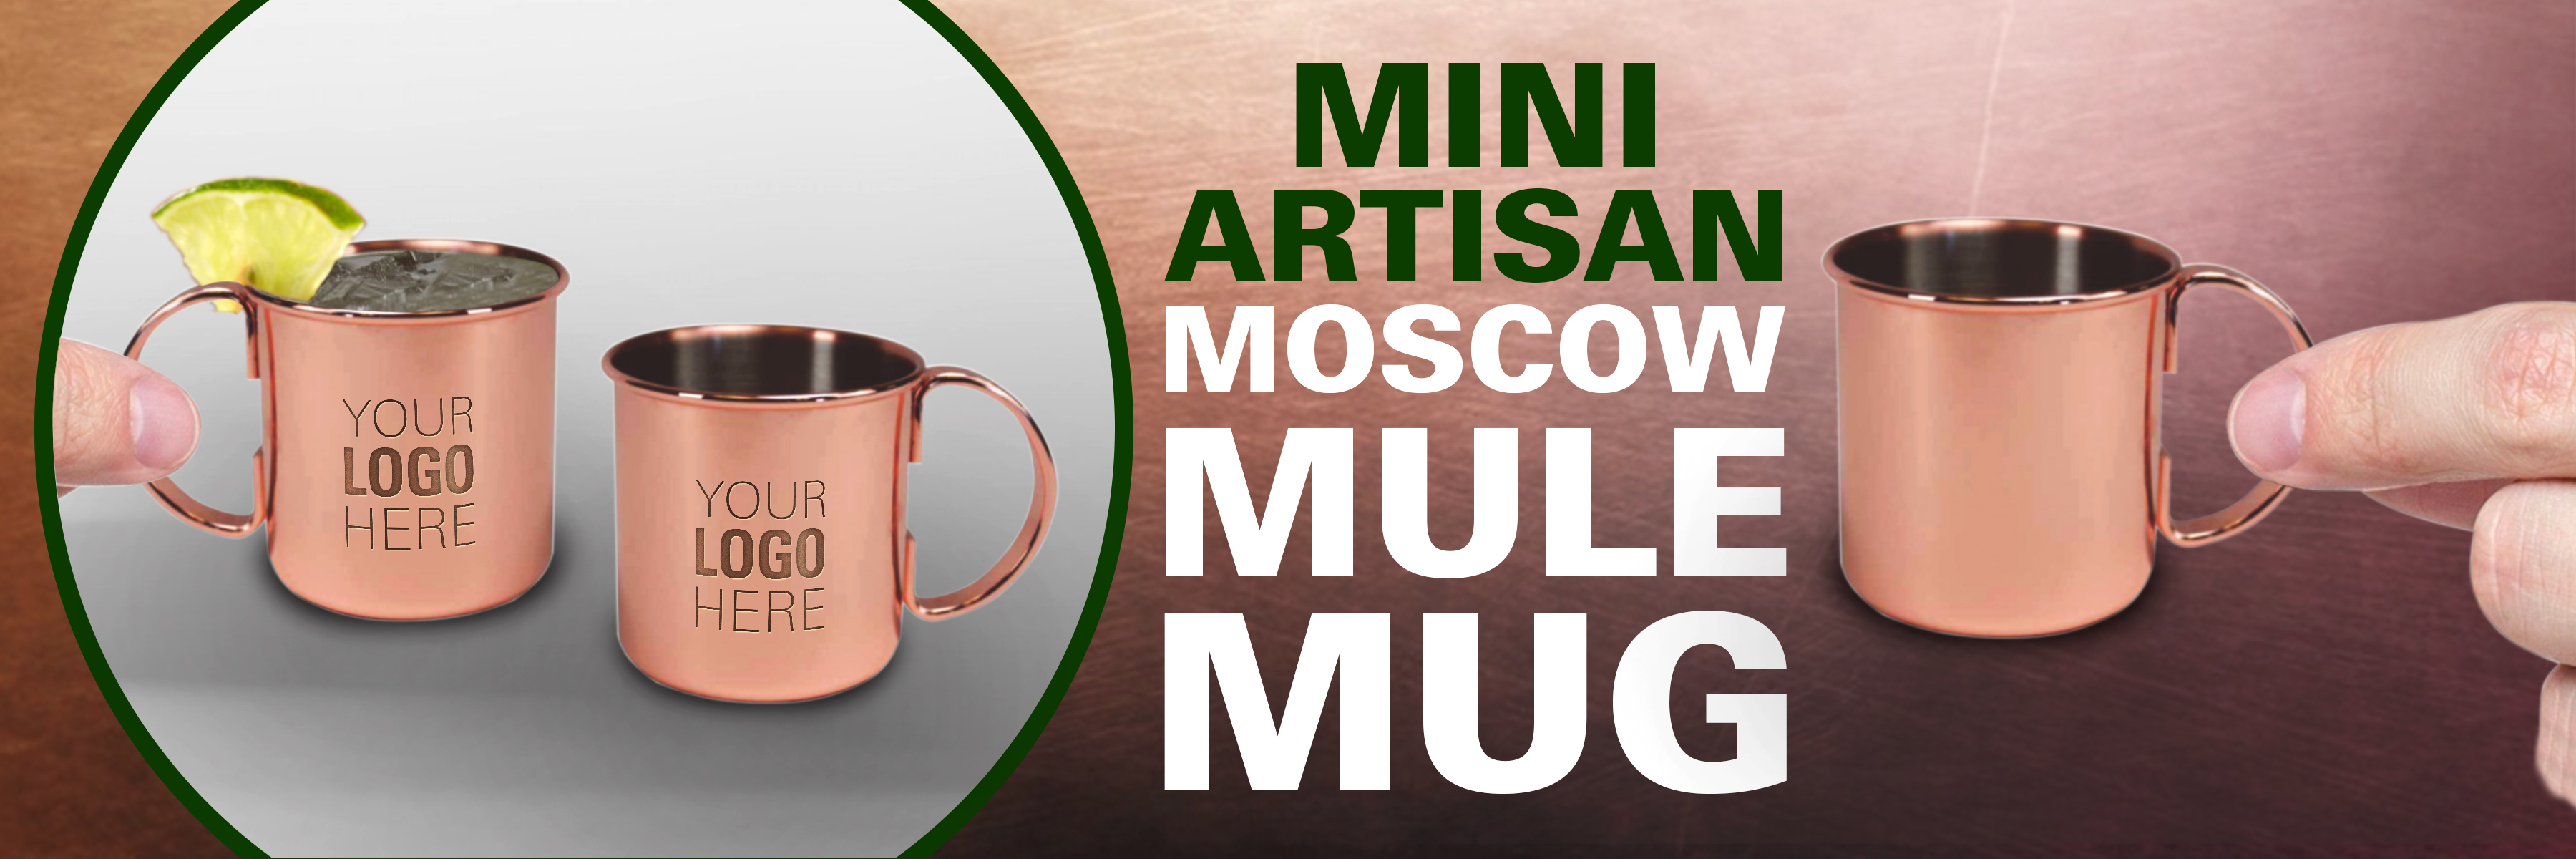 mini artisan moscow mule mug